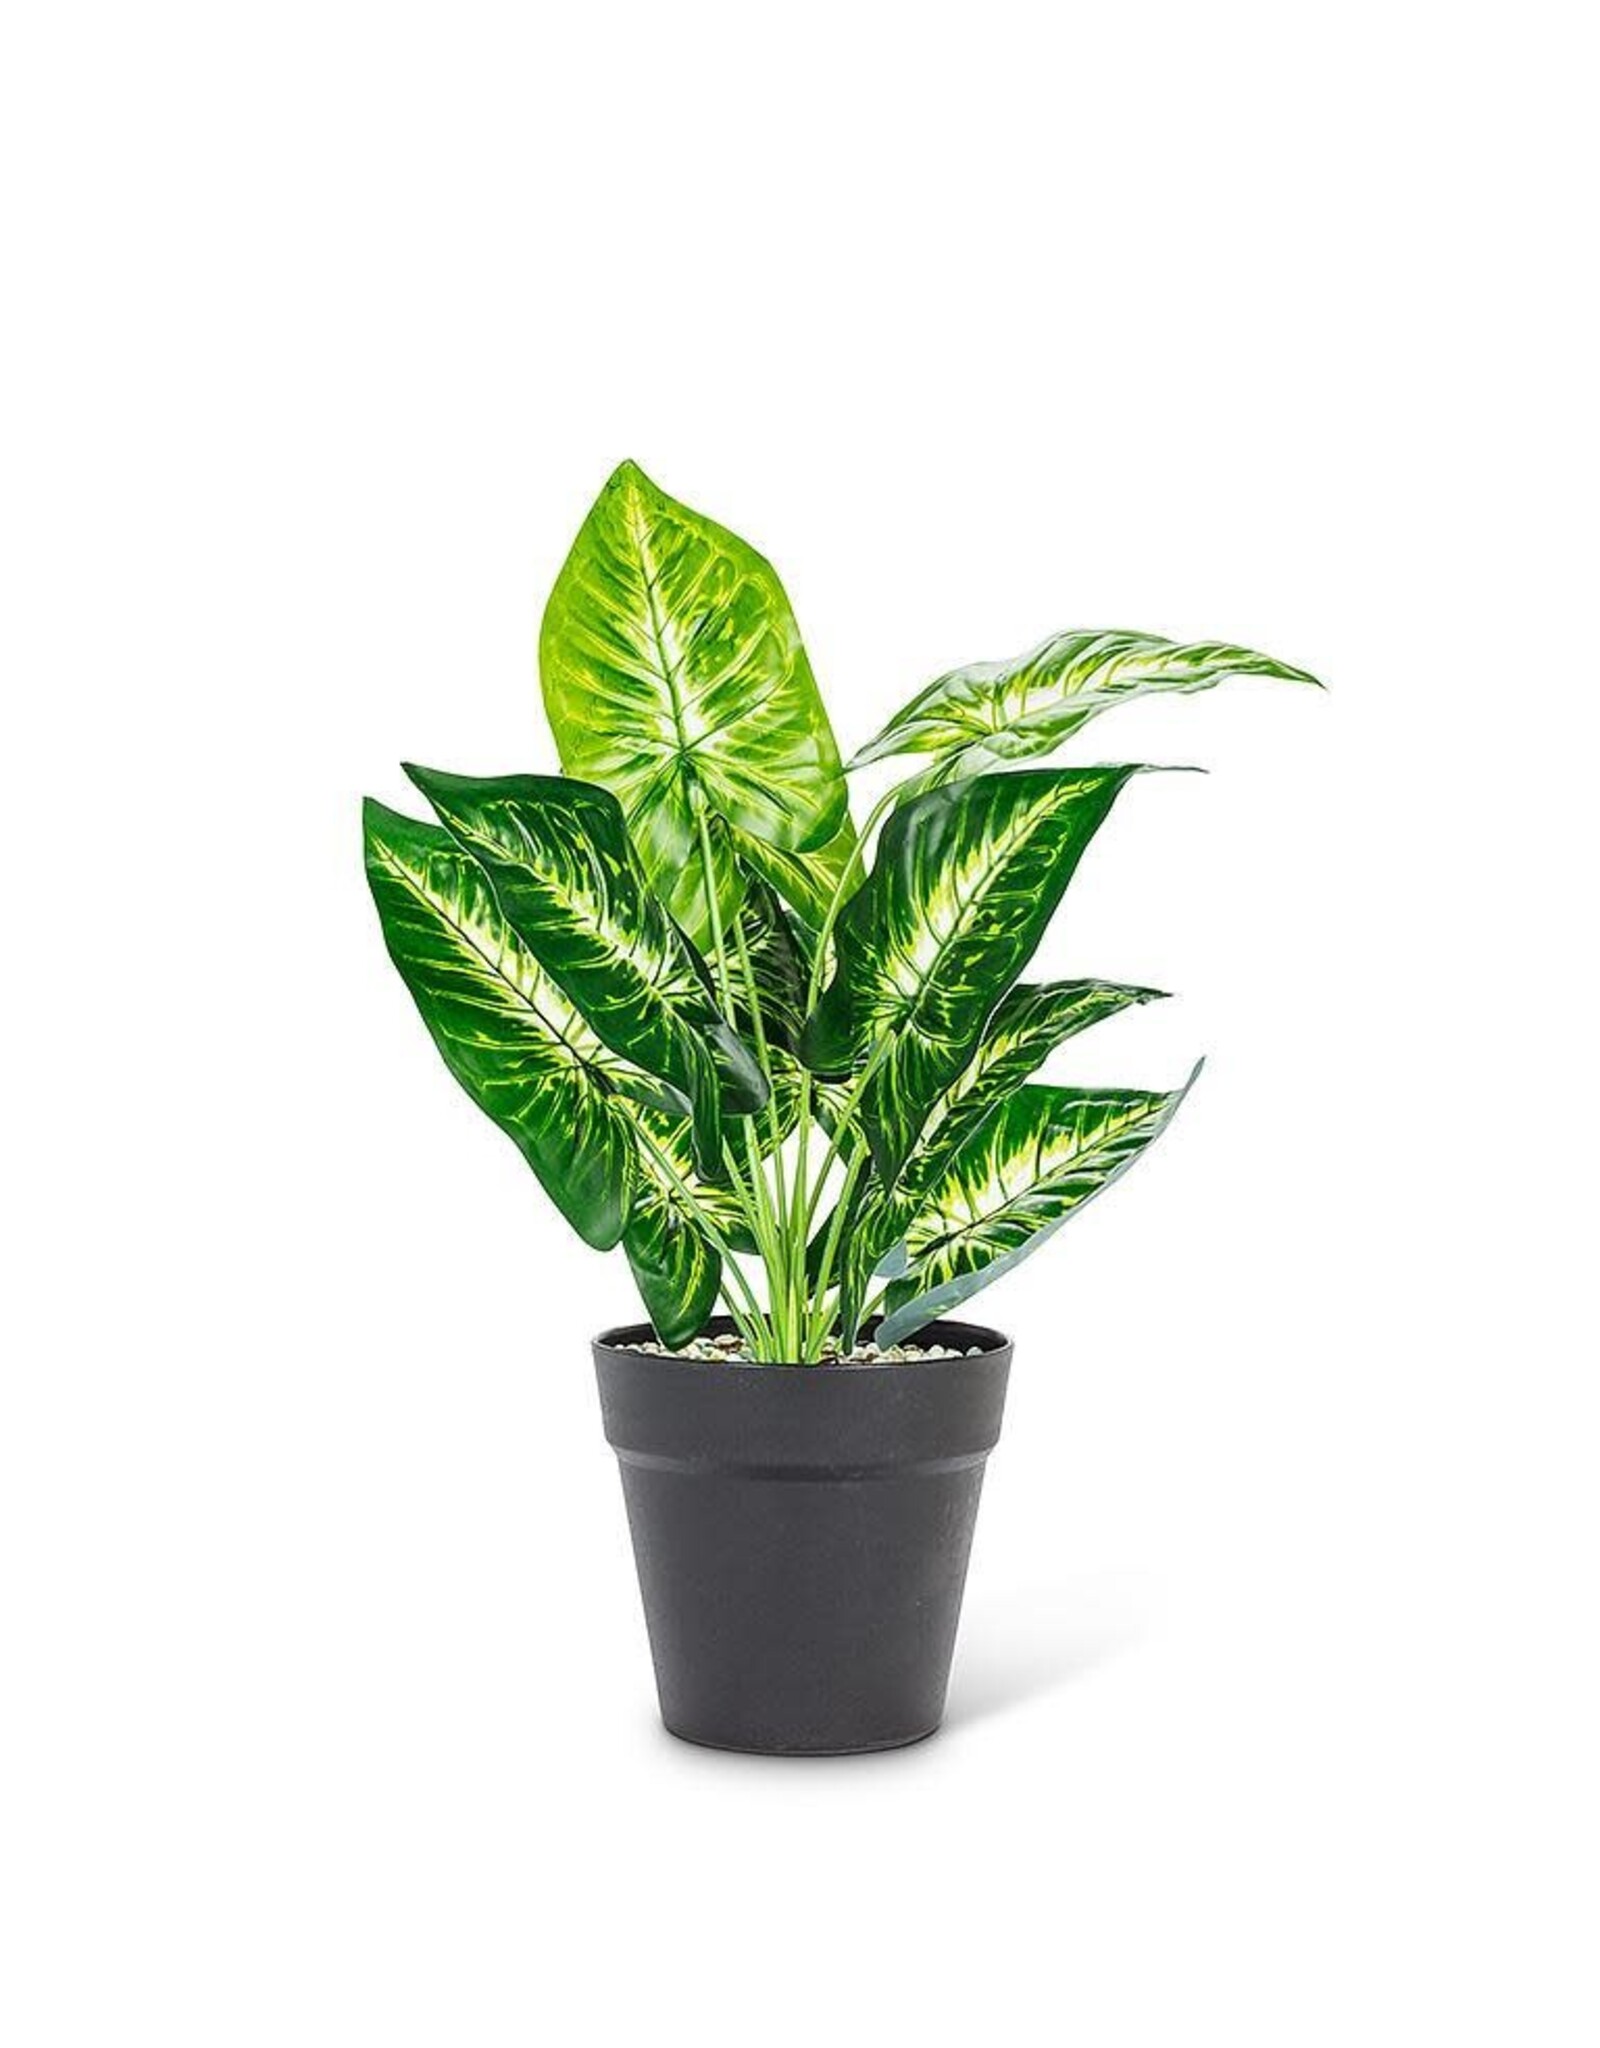 Large Variegated Leaf Plant - 16"